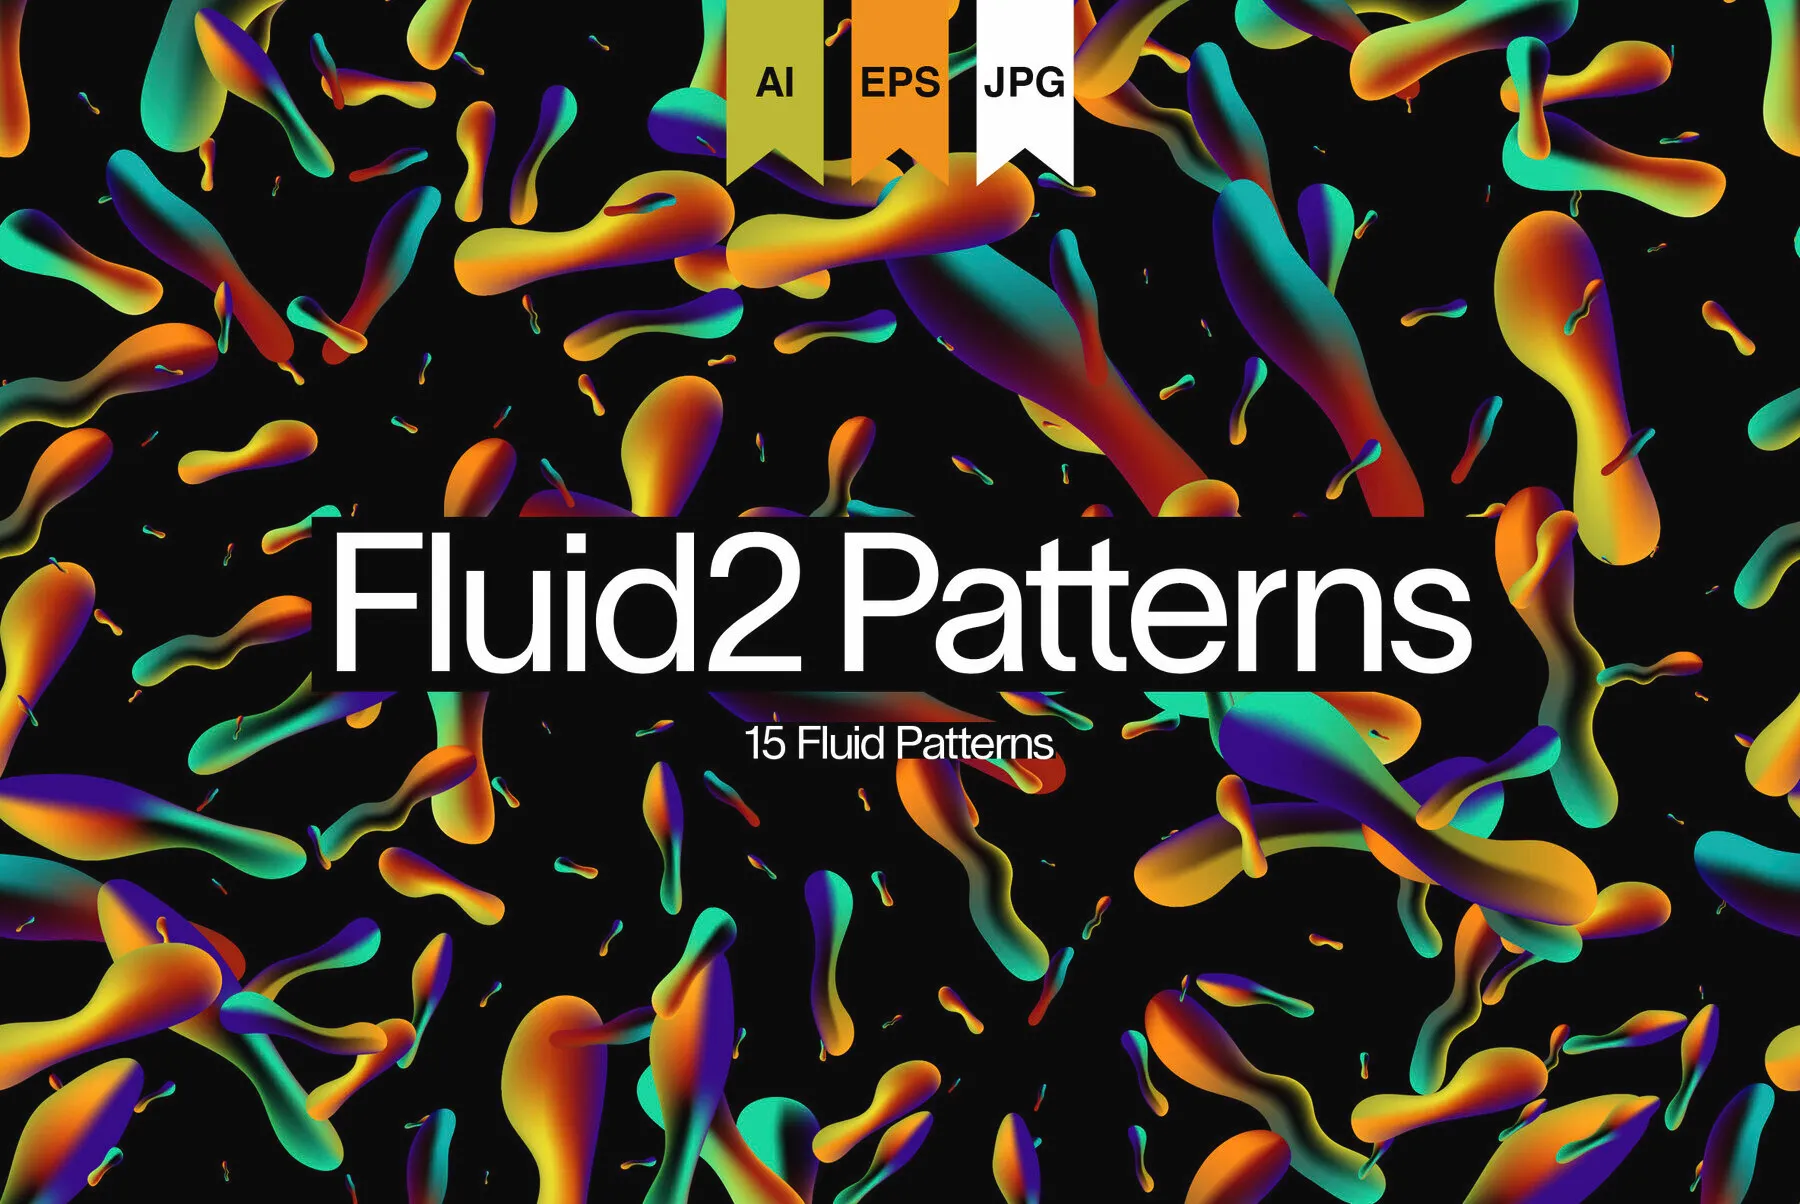 Fluid2 Patterns